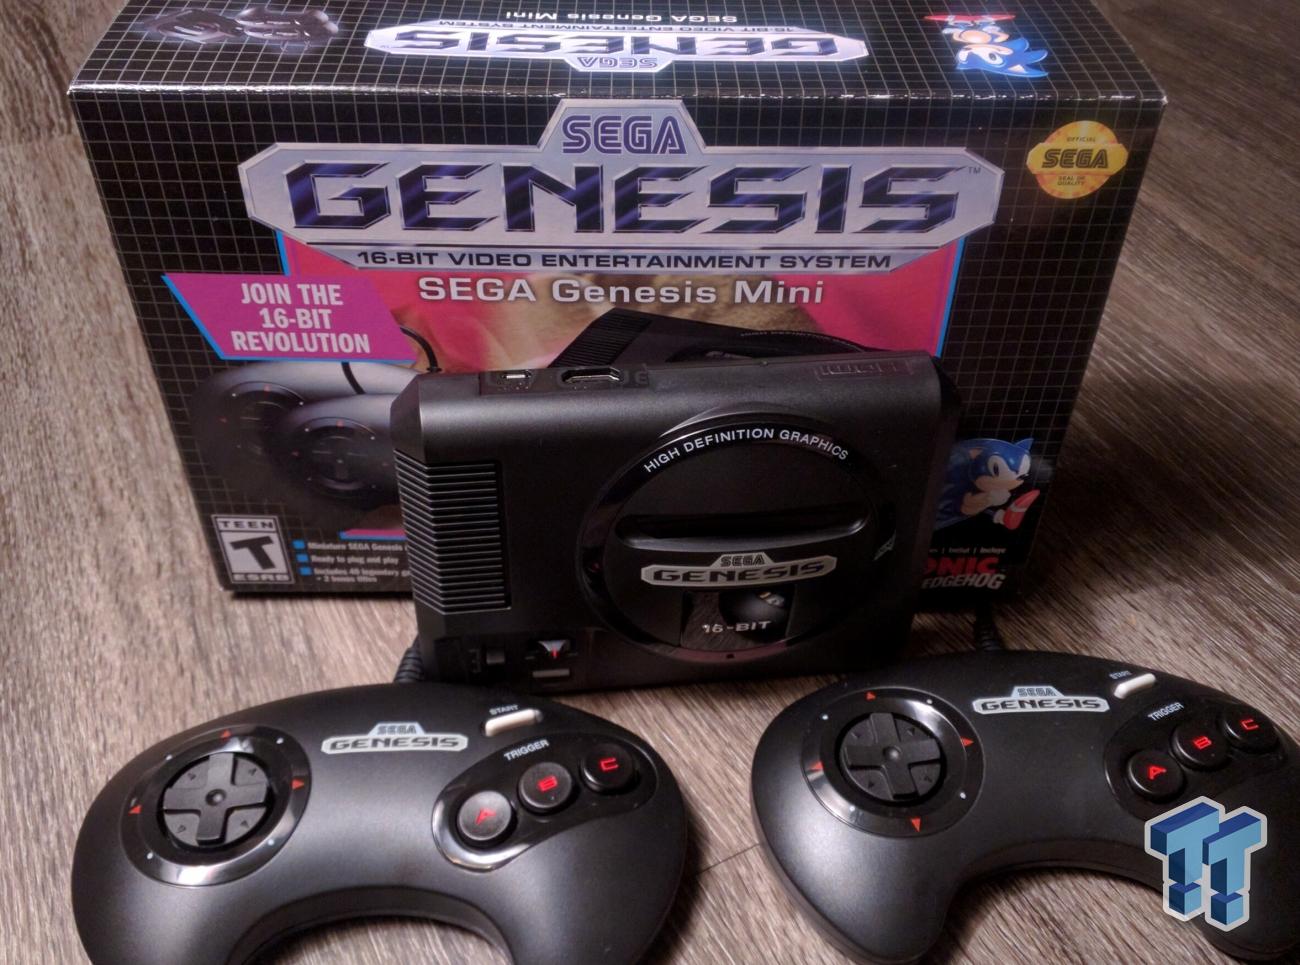 Sega Genesis Mini review: $80 delivers a ton of blast-processing fun